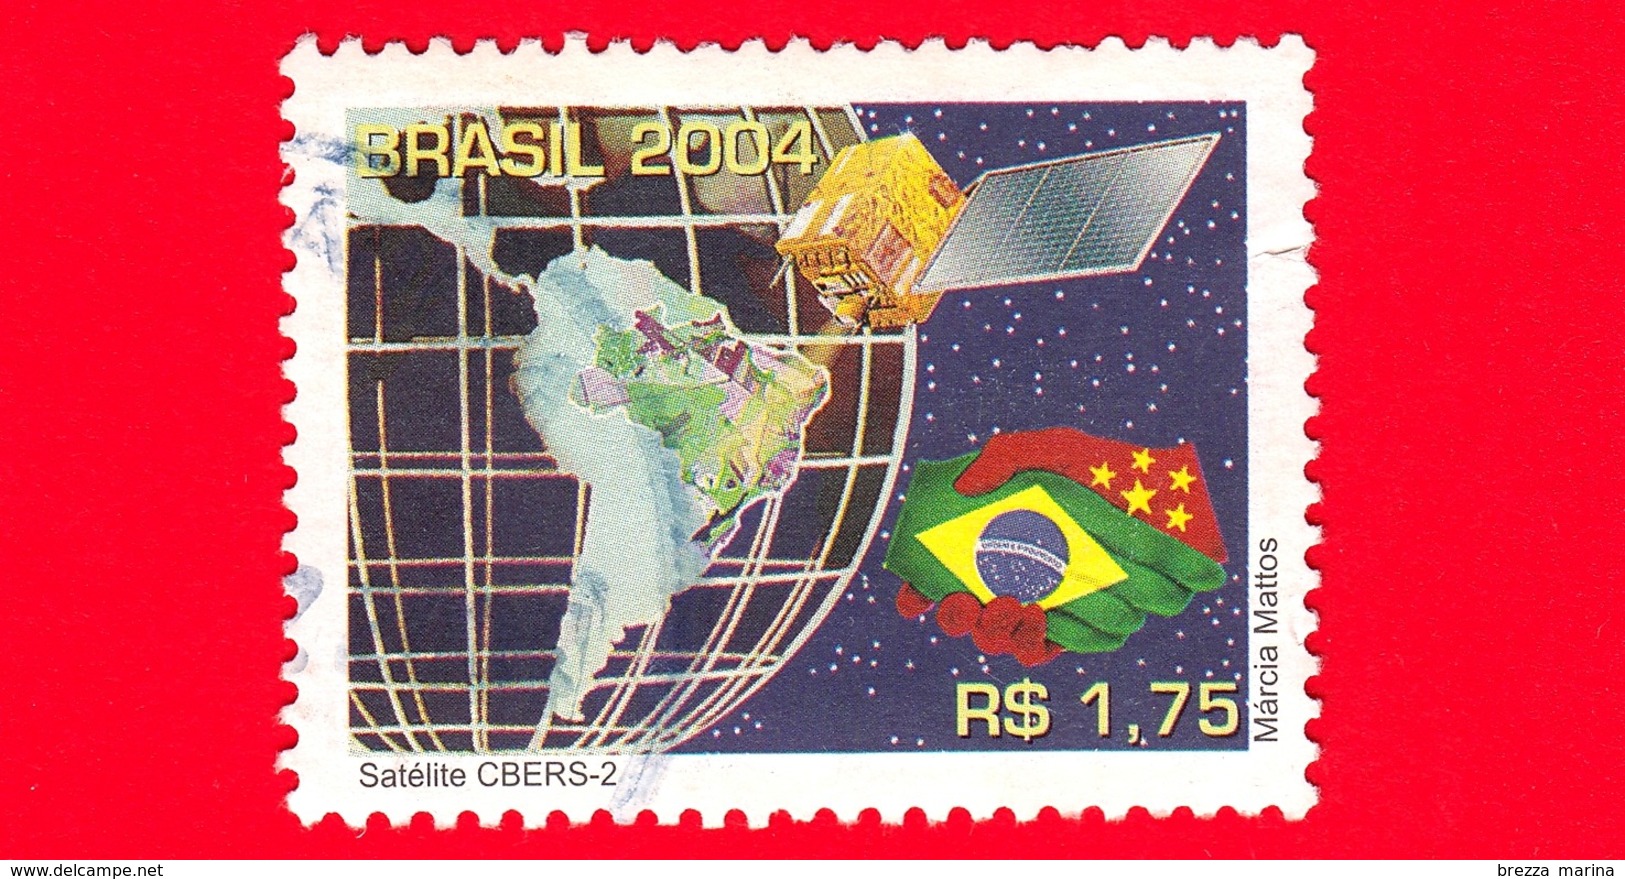 BRASILE - Usato - 2004 - CBERS-2 Satellite - 1.75 - Used Stamps